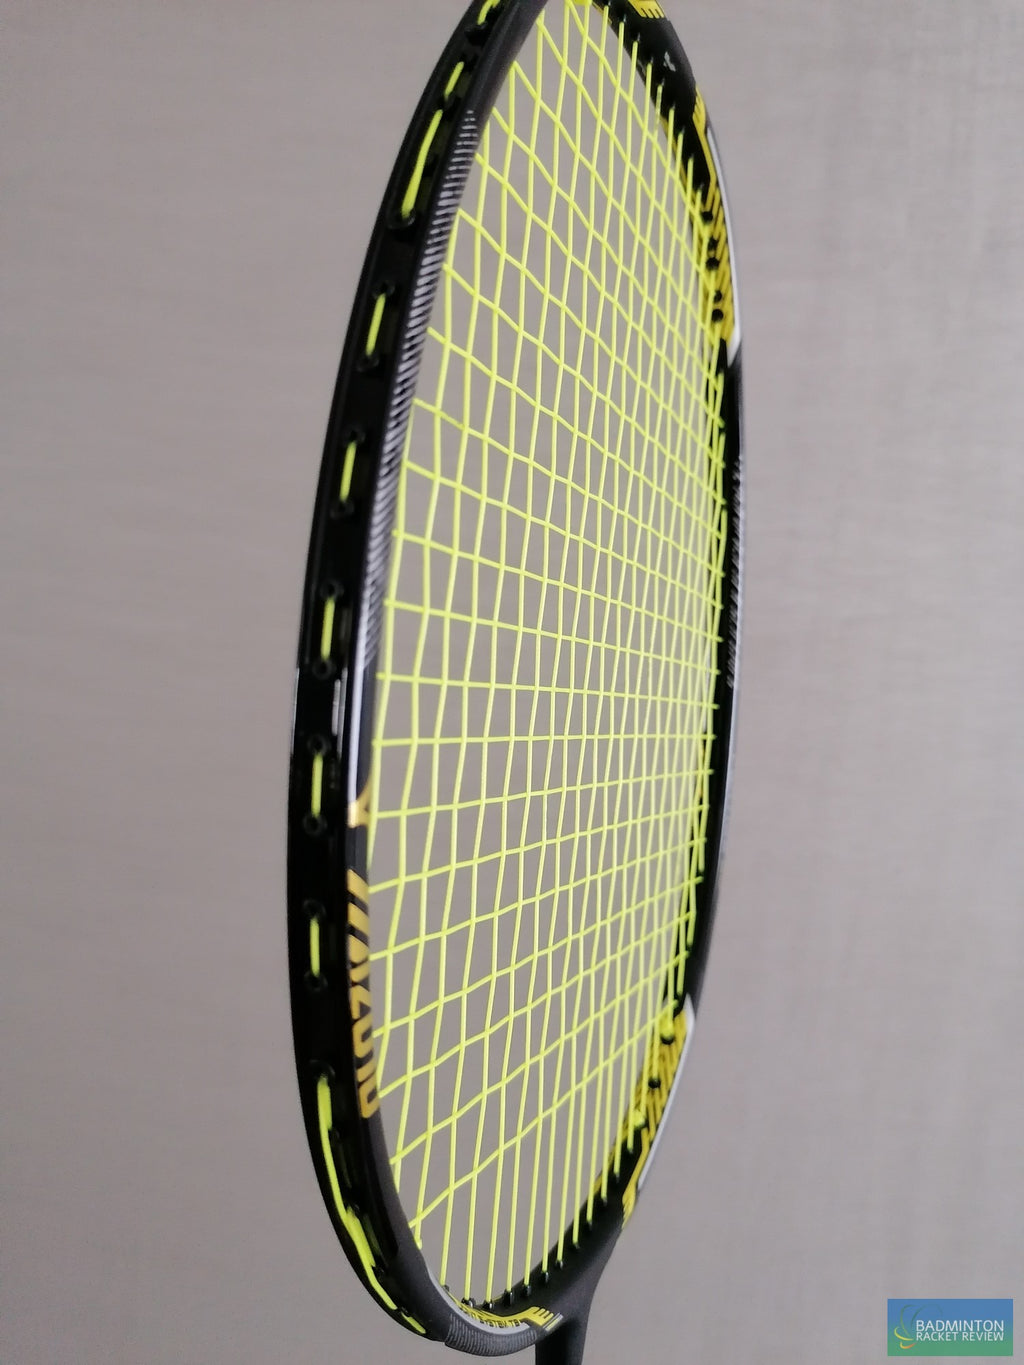 Mizuno Fortius 20 Badminton Racket | badminton racket review